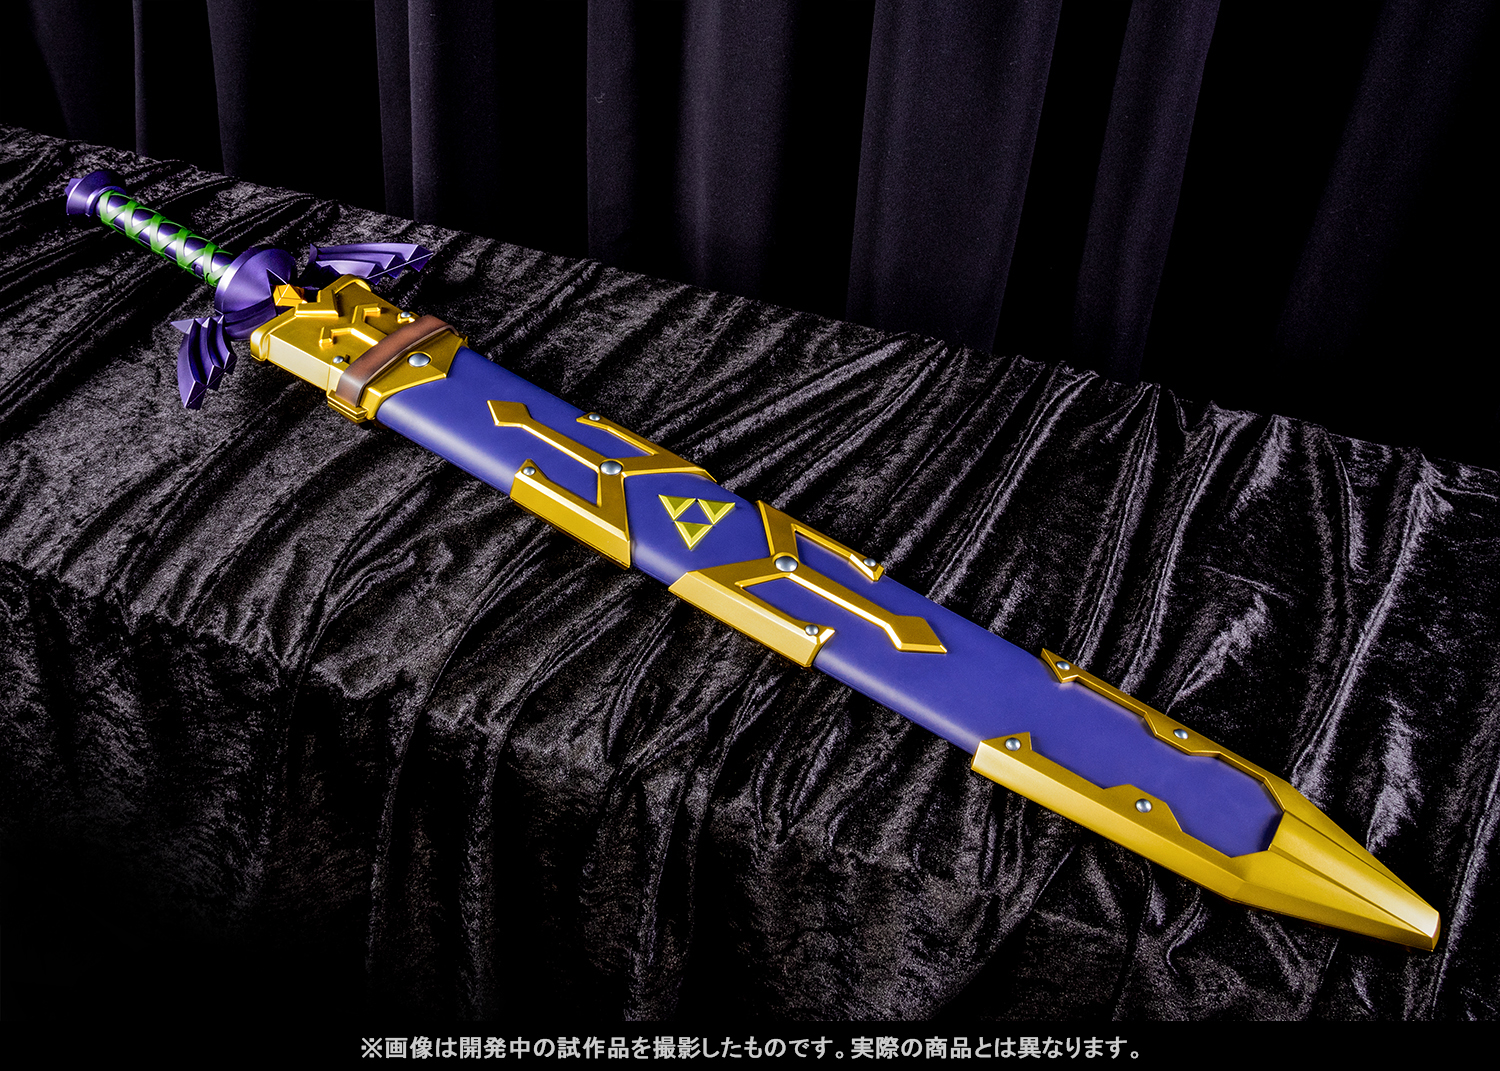 5月10日开放预订《PROPLICA THE LEGEND OF ZELDA MASTER SWORD》原型介绍